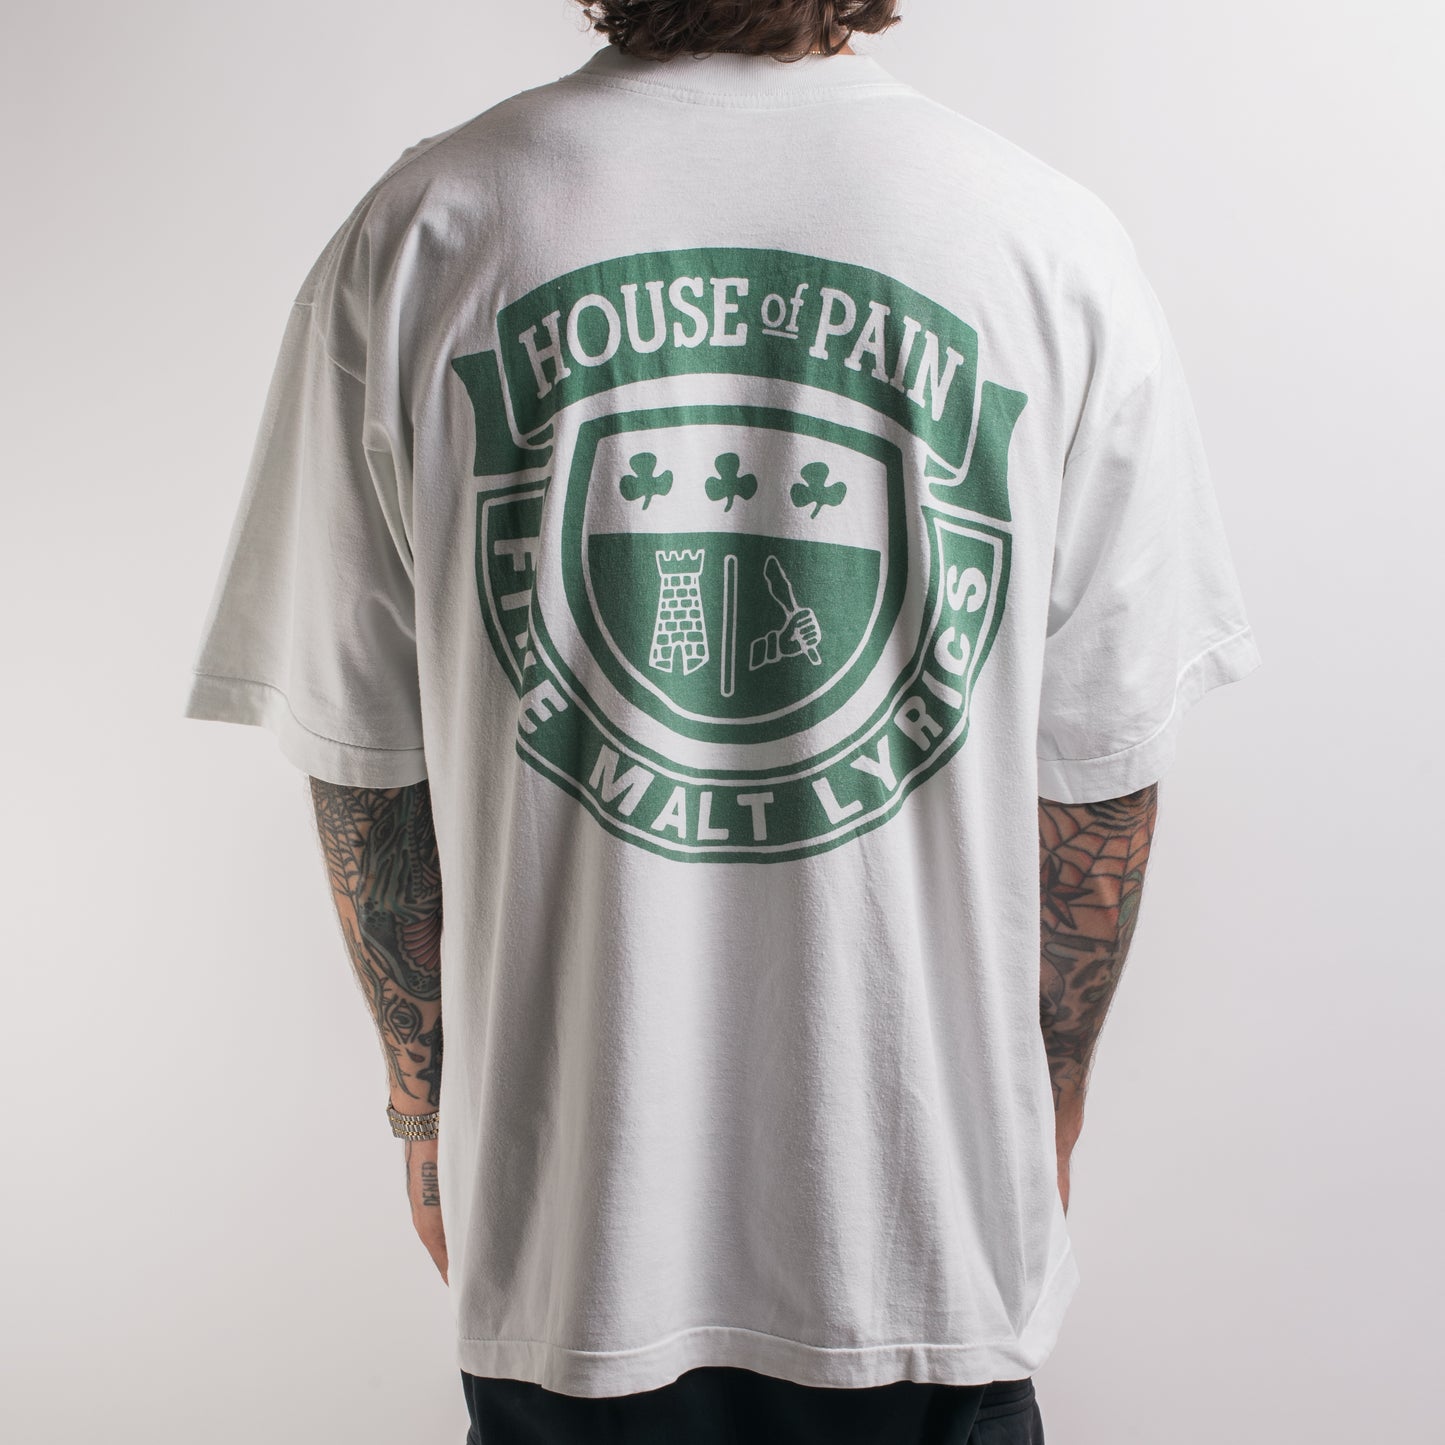 Vintage 90’s House Of Pain Fine Malt Lyrics T-Shirt